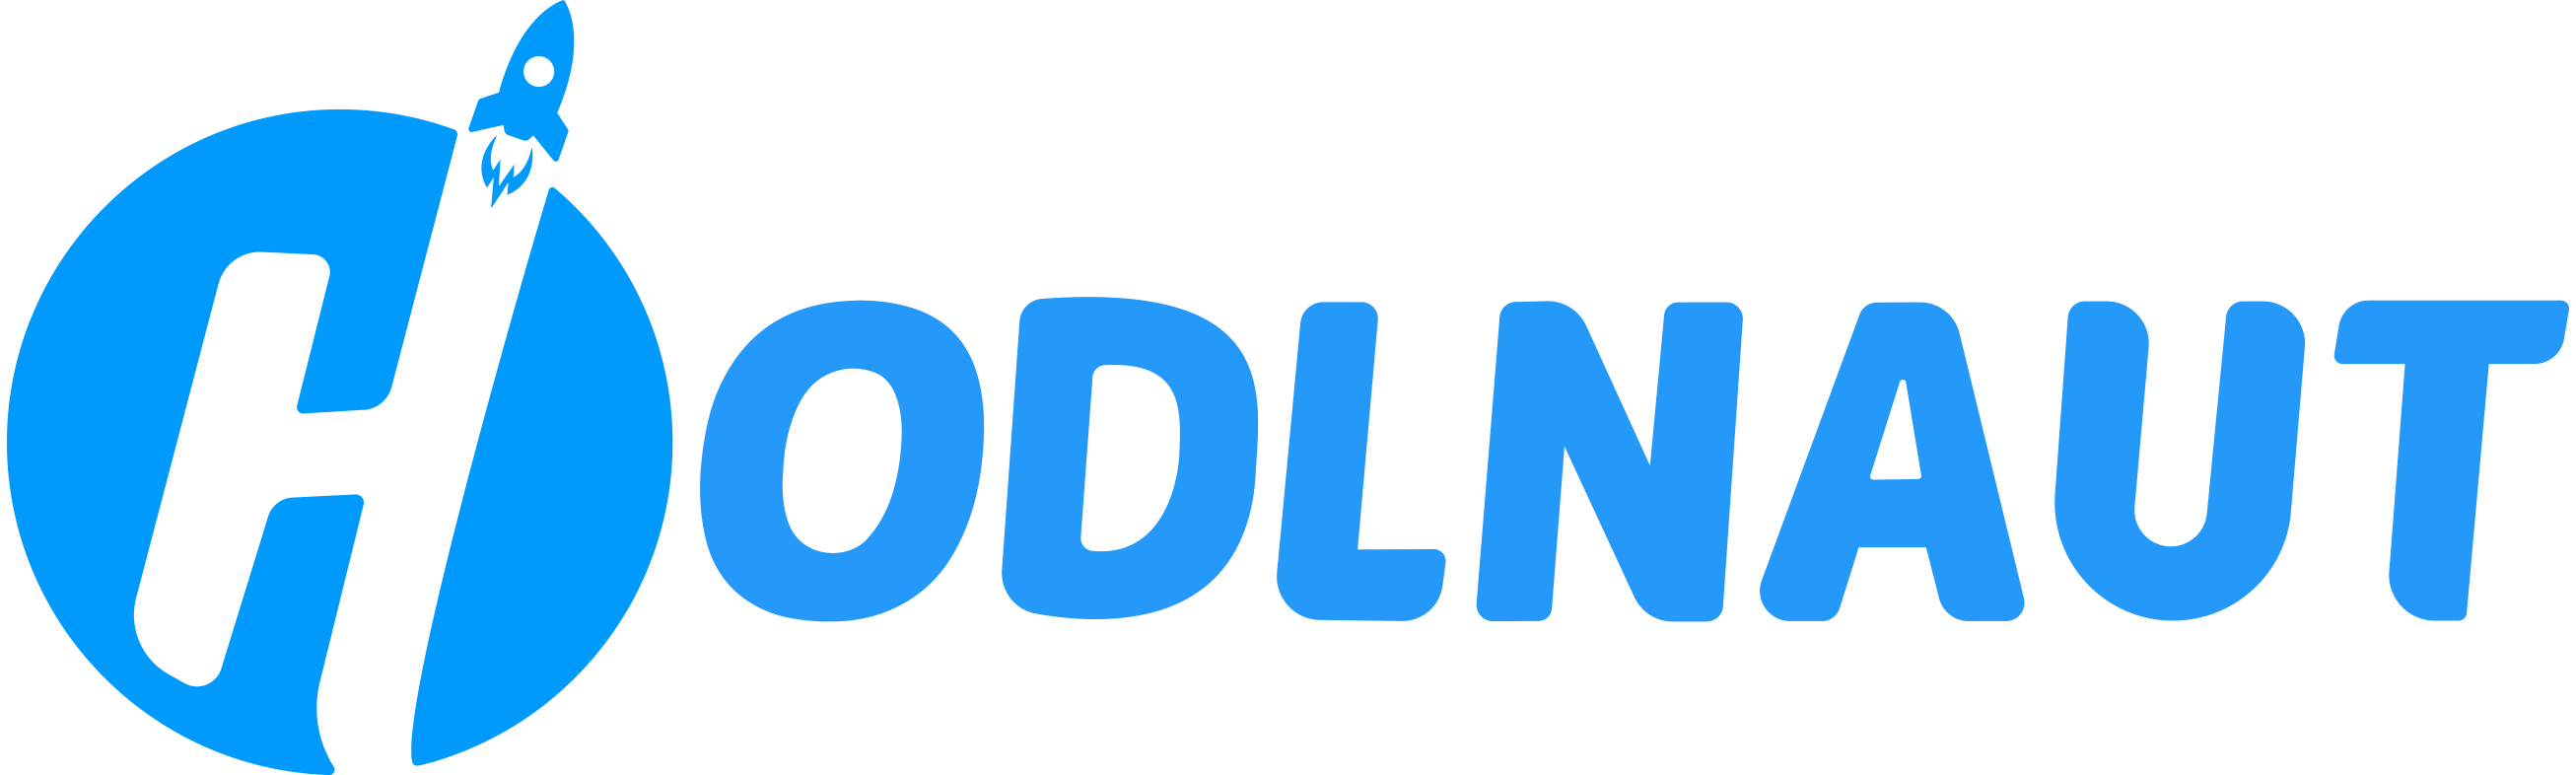 hodlnaut logo